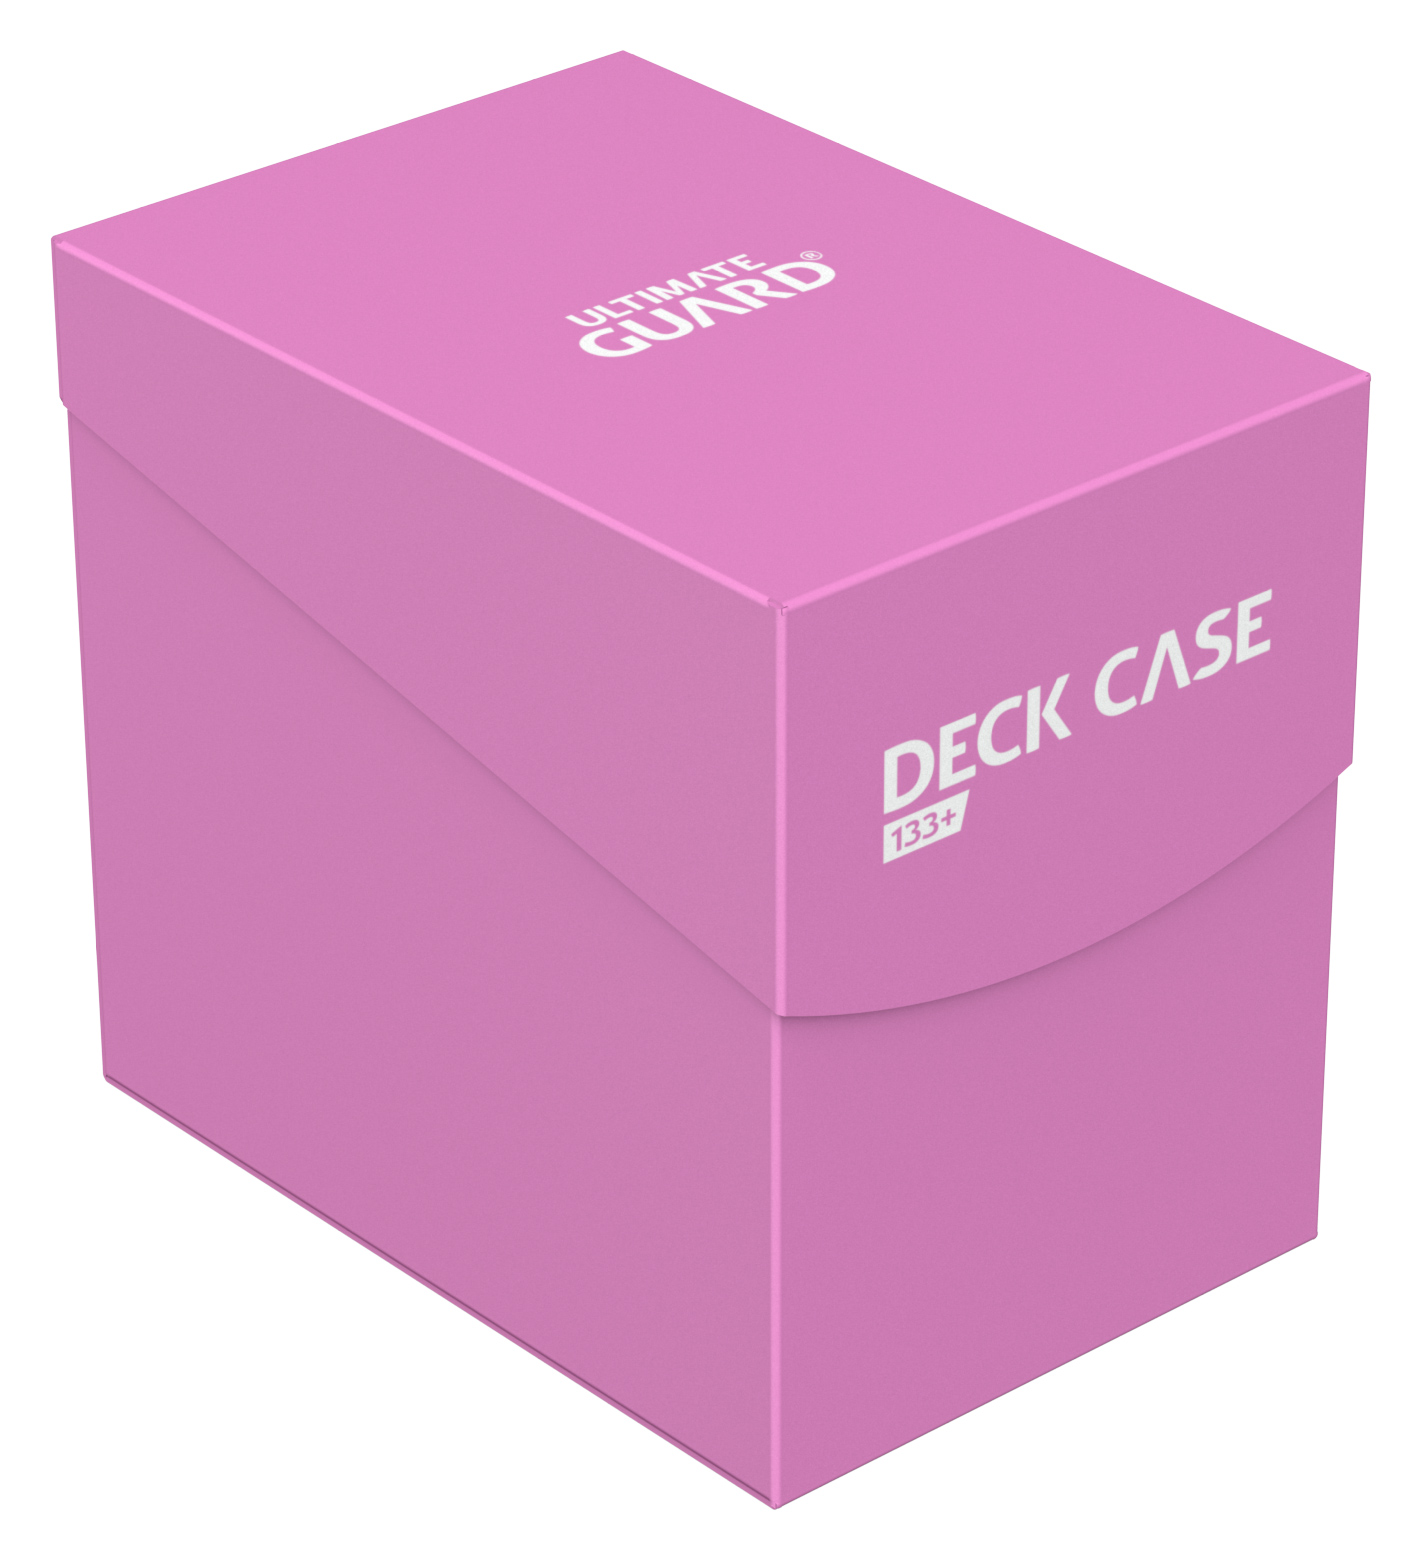 Ultimate Guard Card Deck Box Deck Case 133+ Pink Rosa